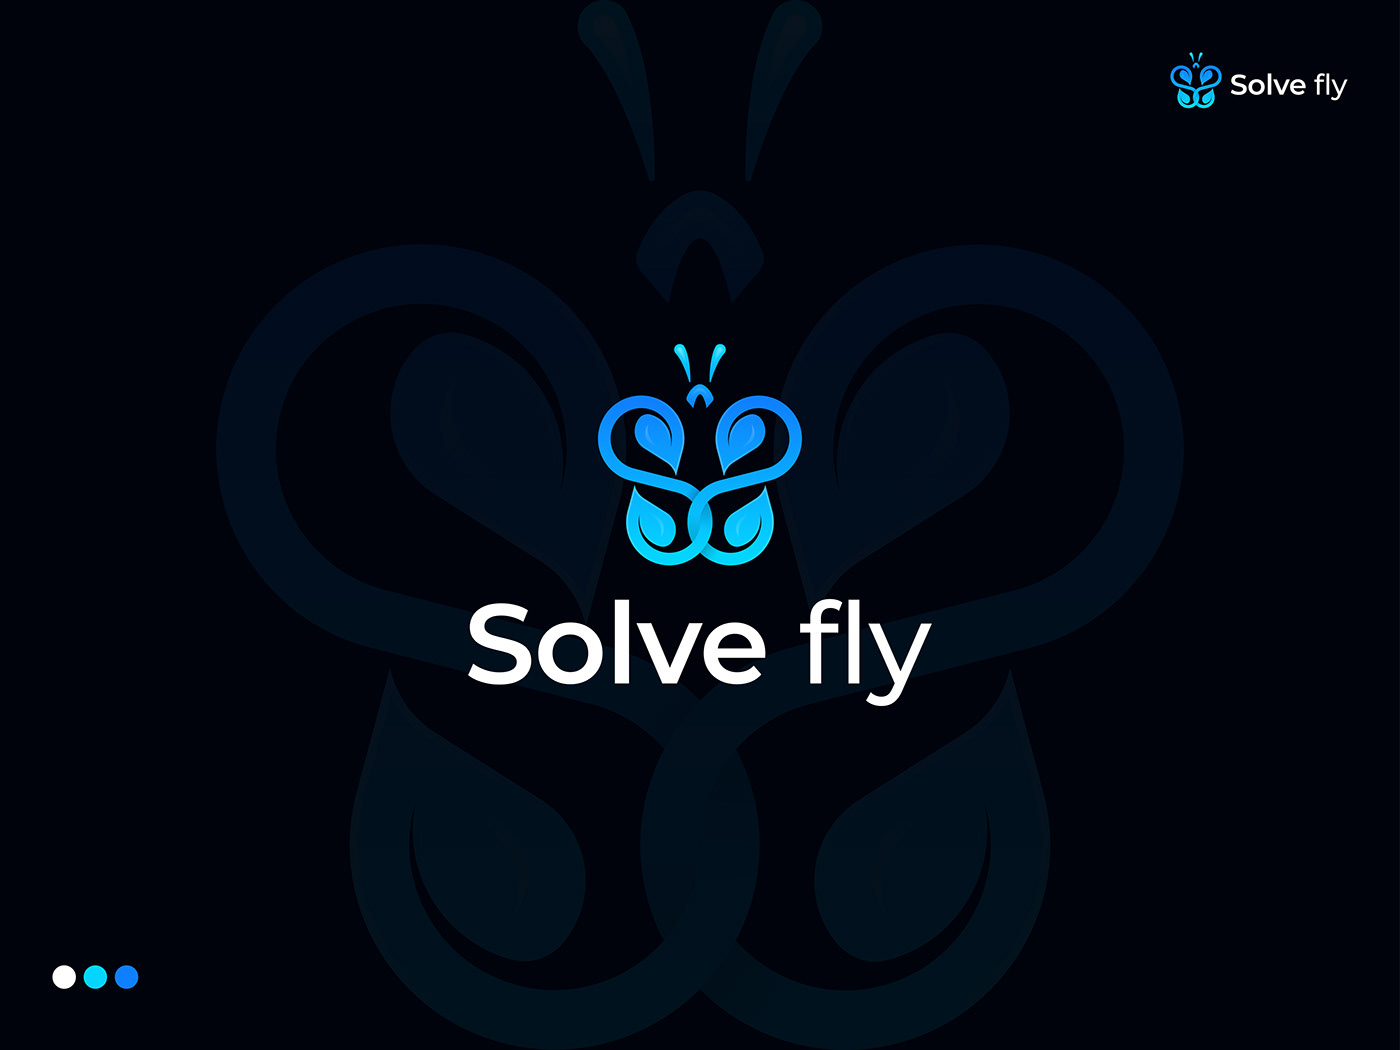 adventure butterfly butterfly logo butterfly logo folio butterfly logo icon fly logo fly logo design solve fly logo Travel